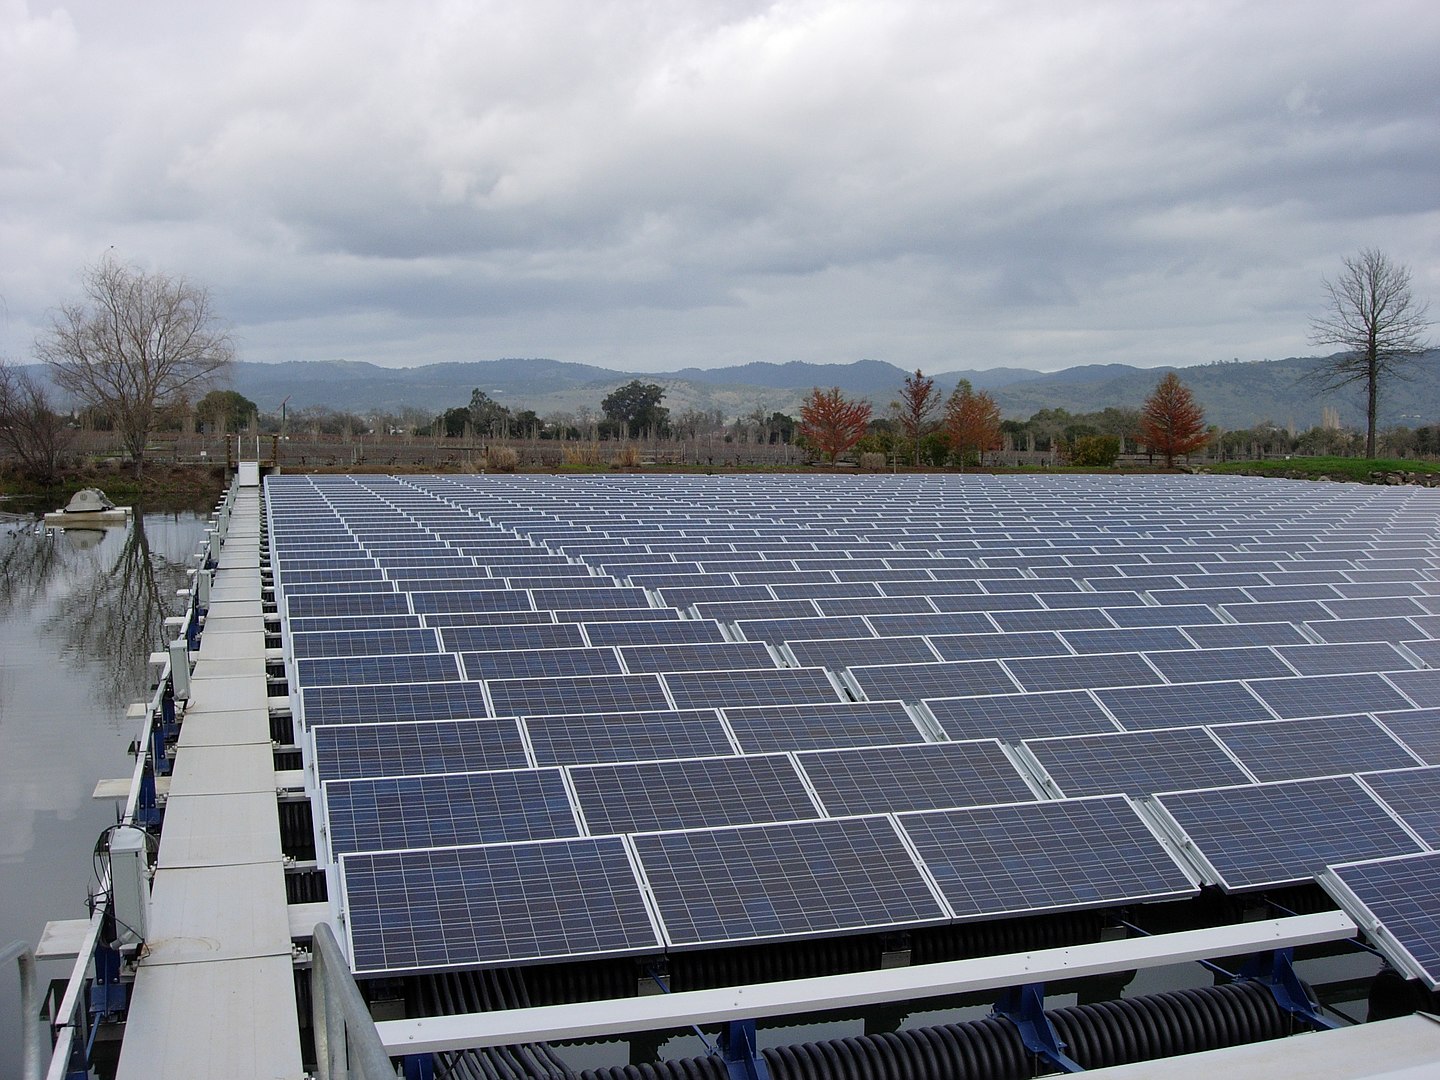 Rinnovabili • L'impronta di carbonio del fotovoltaico galleggiante